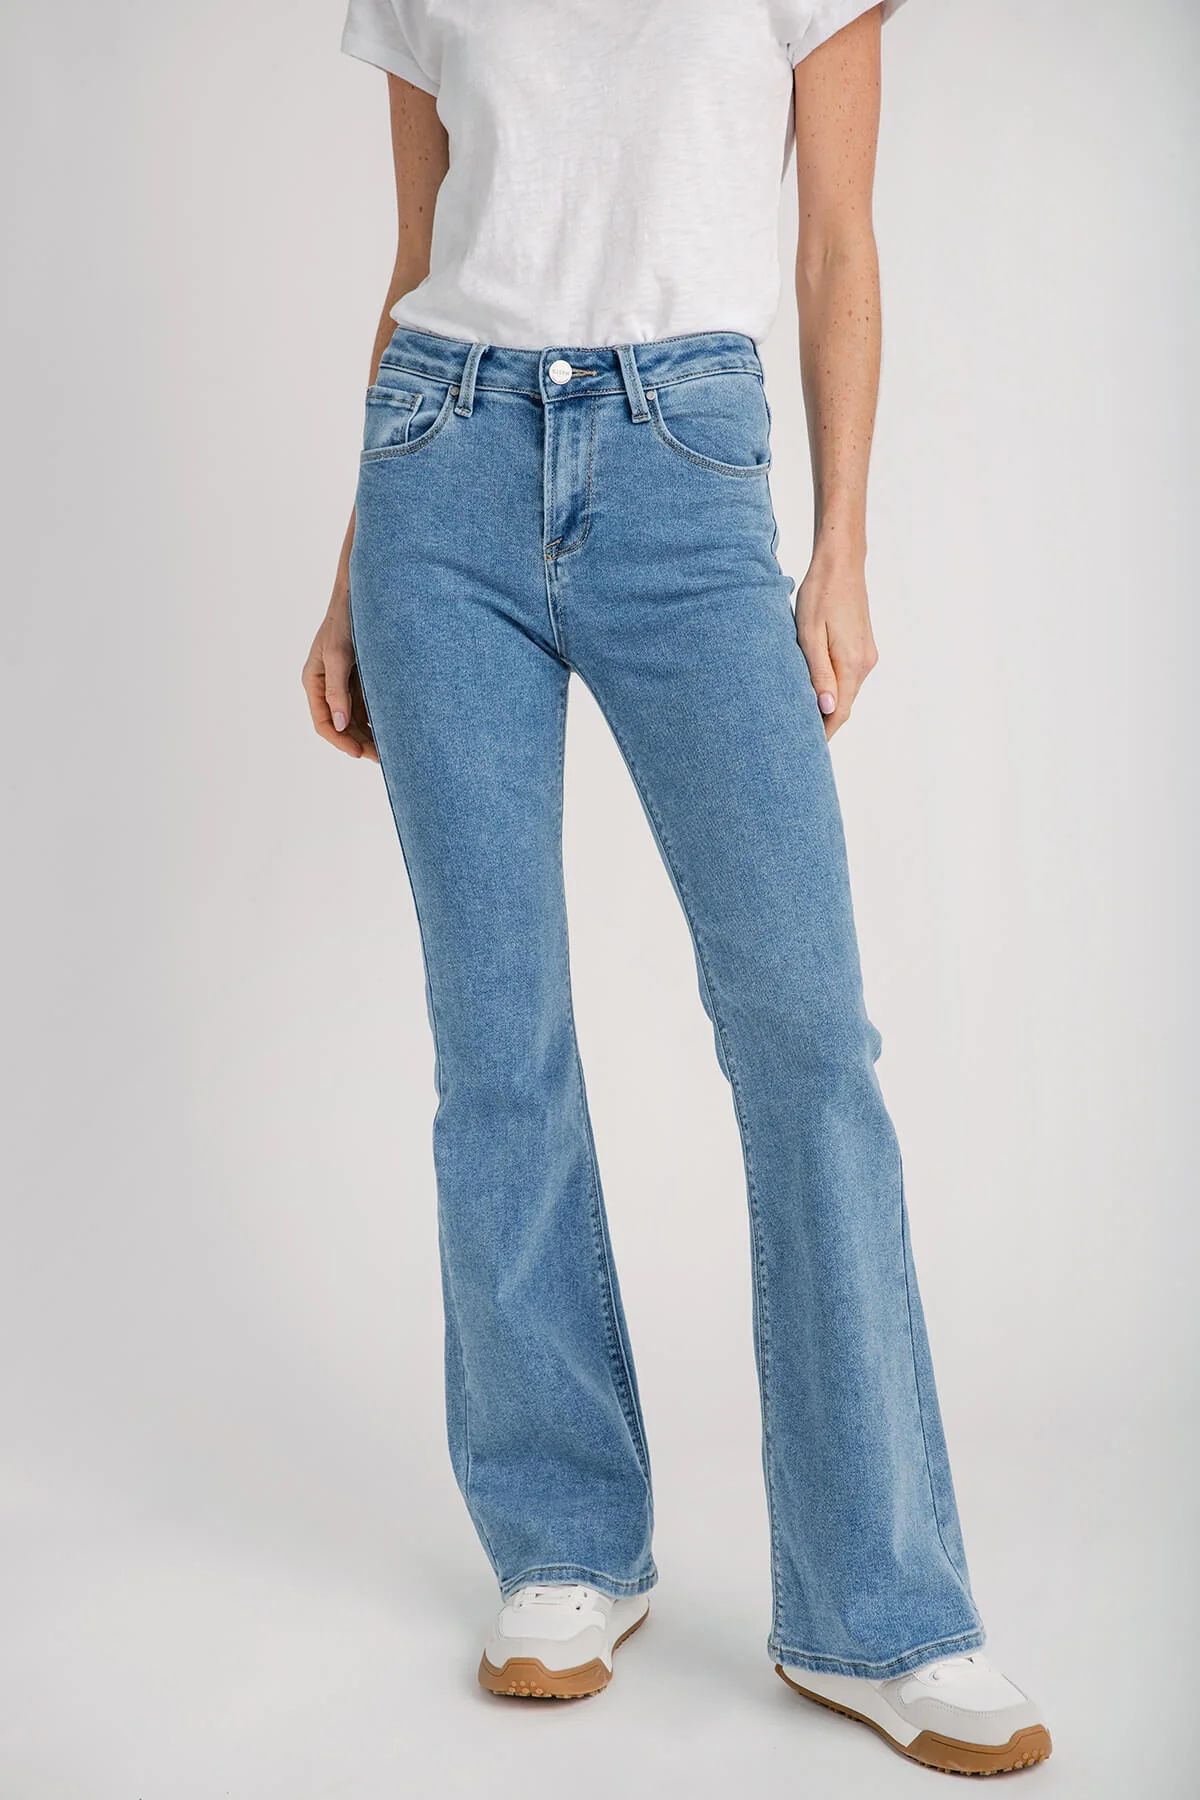 Risen Olivia High Rise Flare Jeans | Social Threads